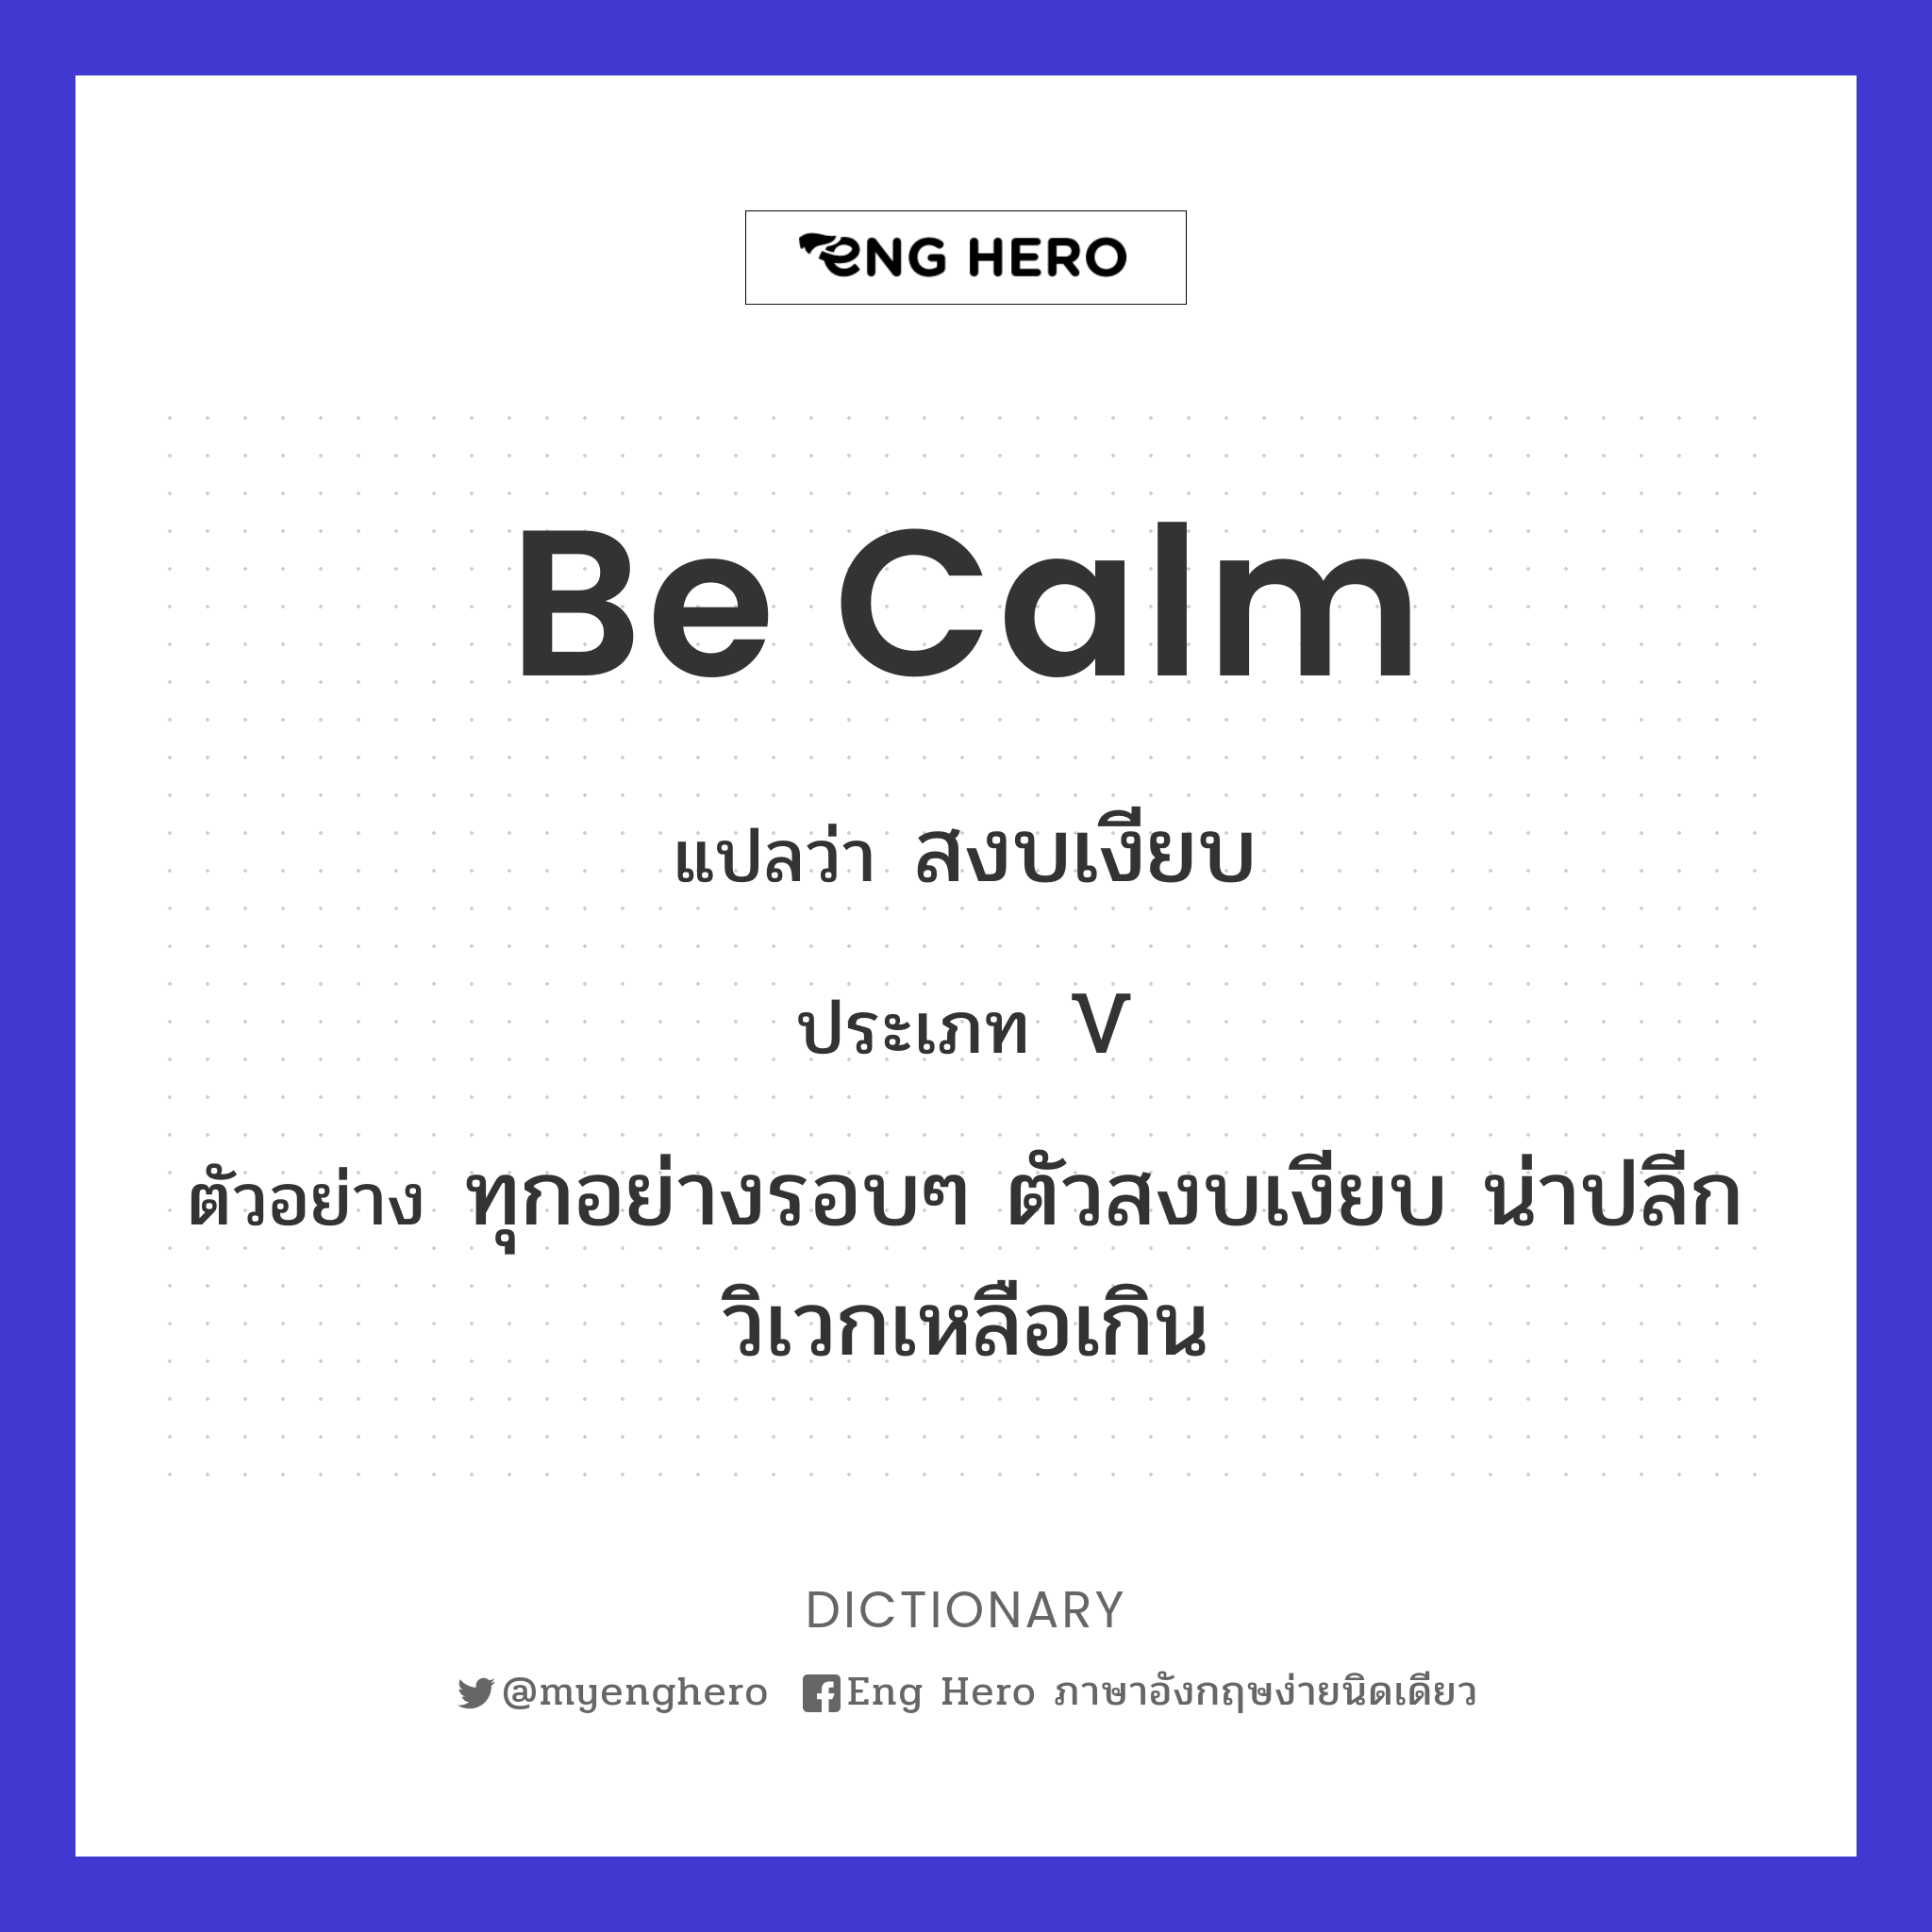 be calm